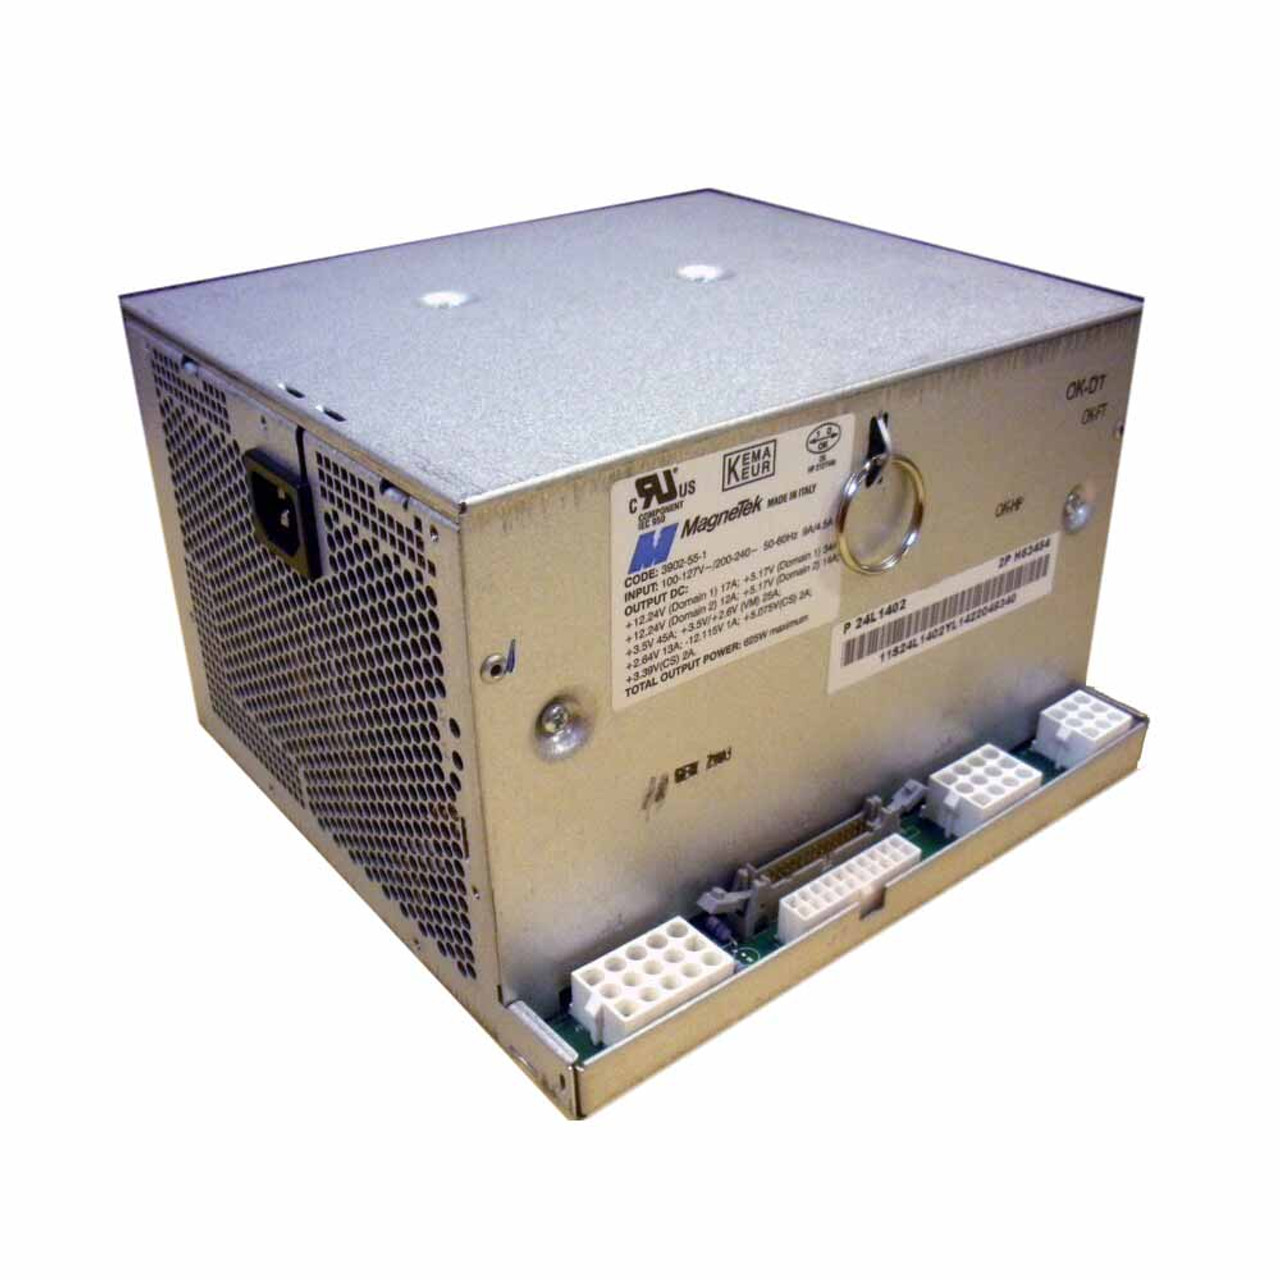 IBM 24L1402 625W Power Supply for 9406-270 / 800 / 810